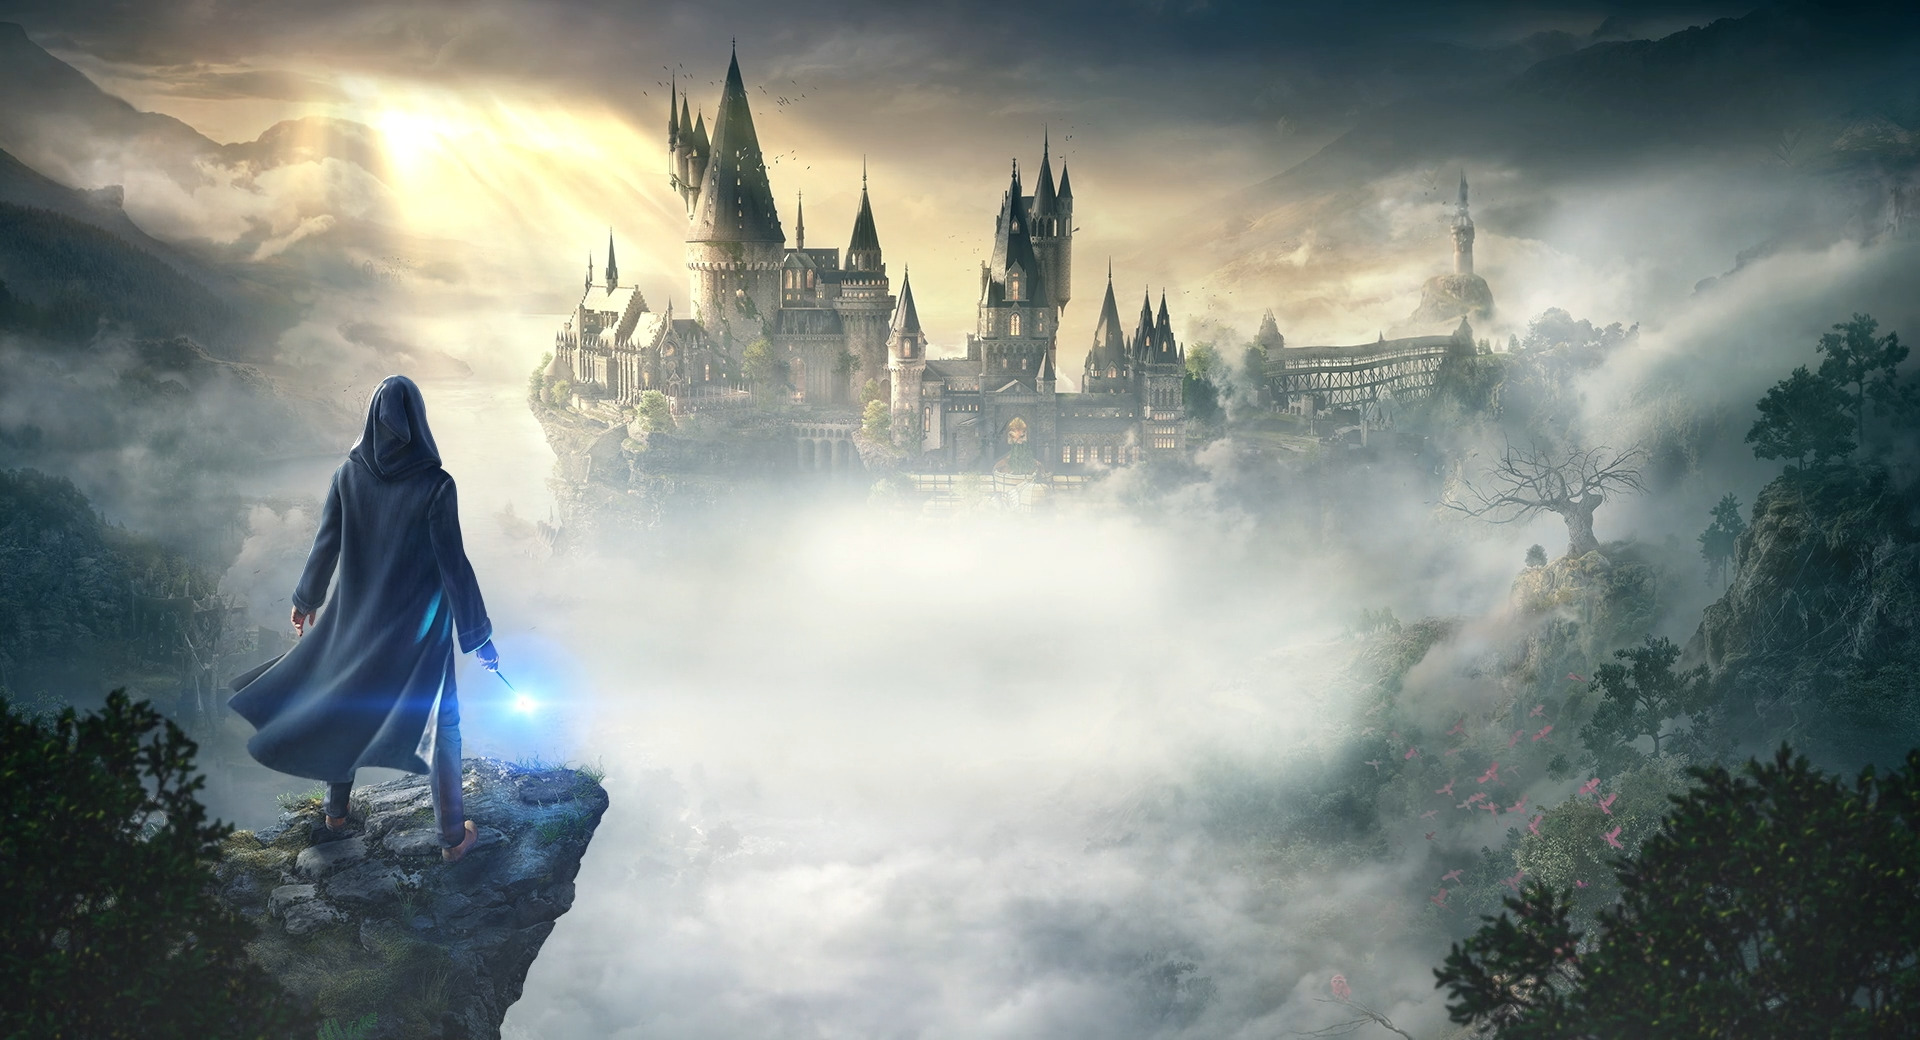 Hogwarts Legacy Officially Steam Deck Verified : r/HarryPotterGame